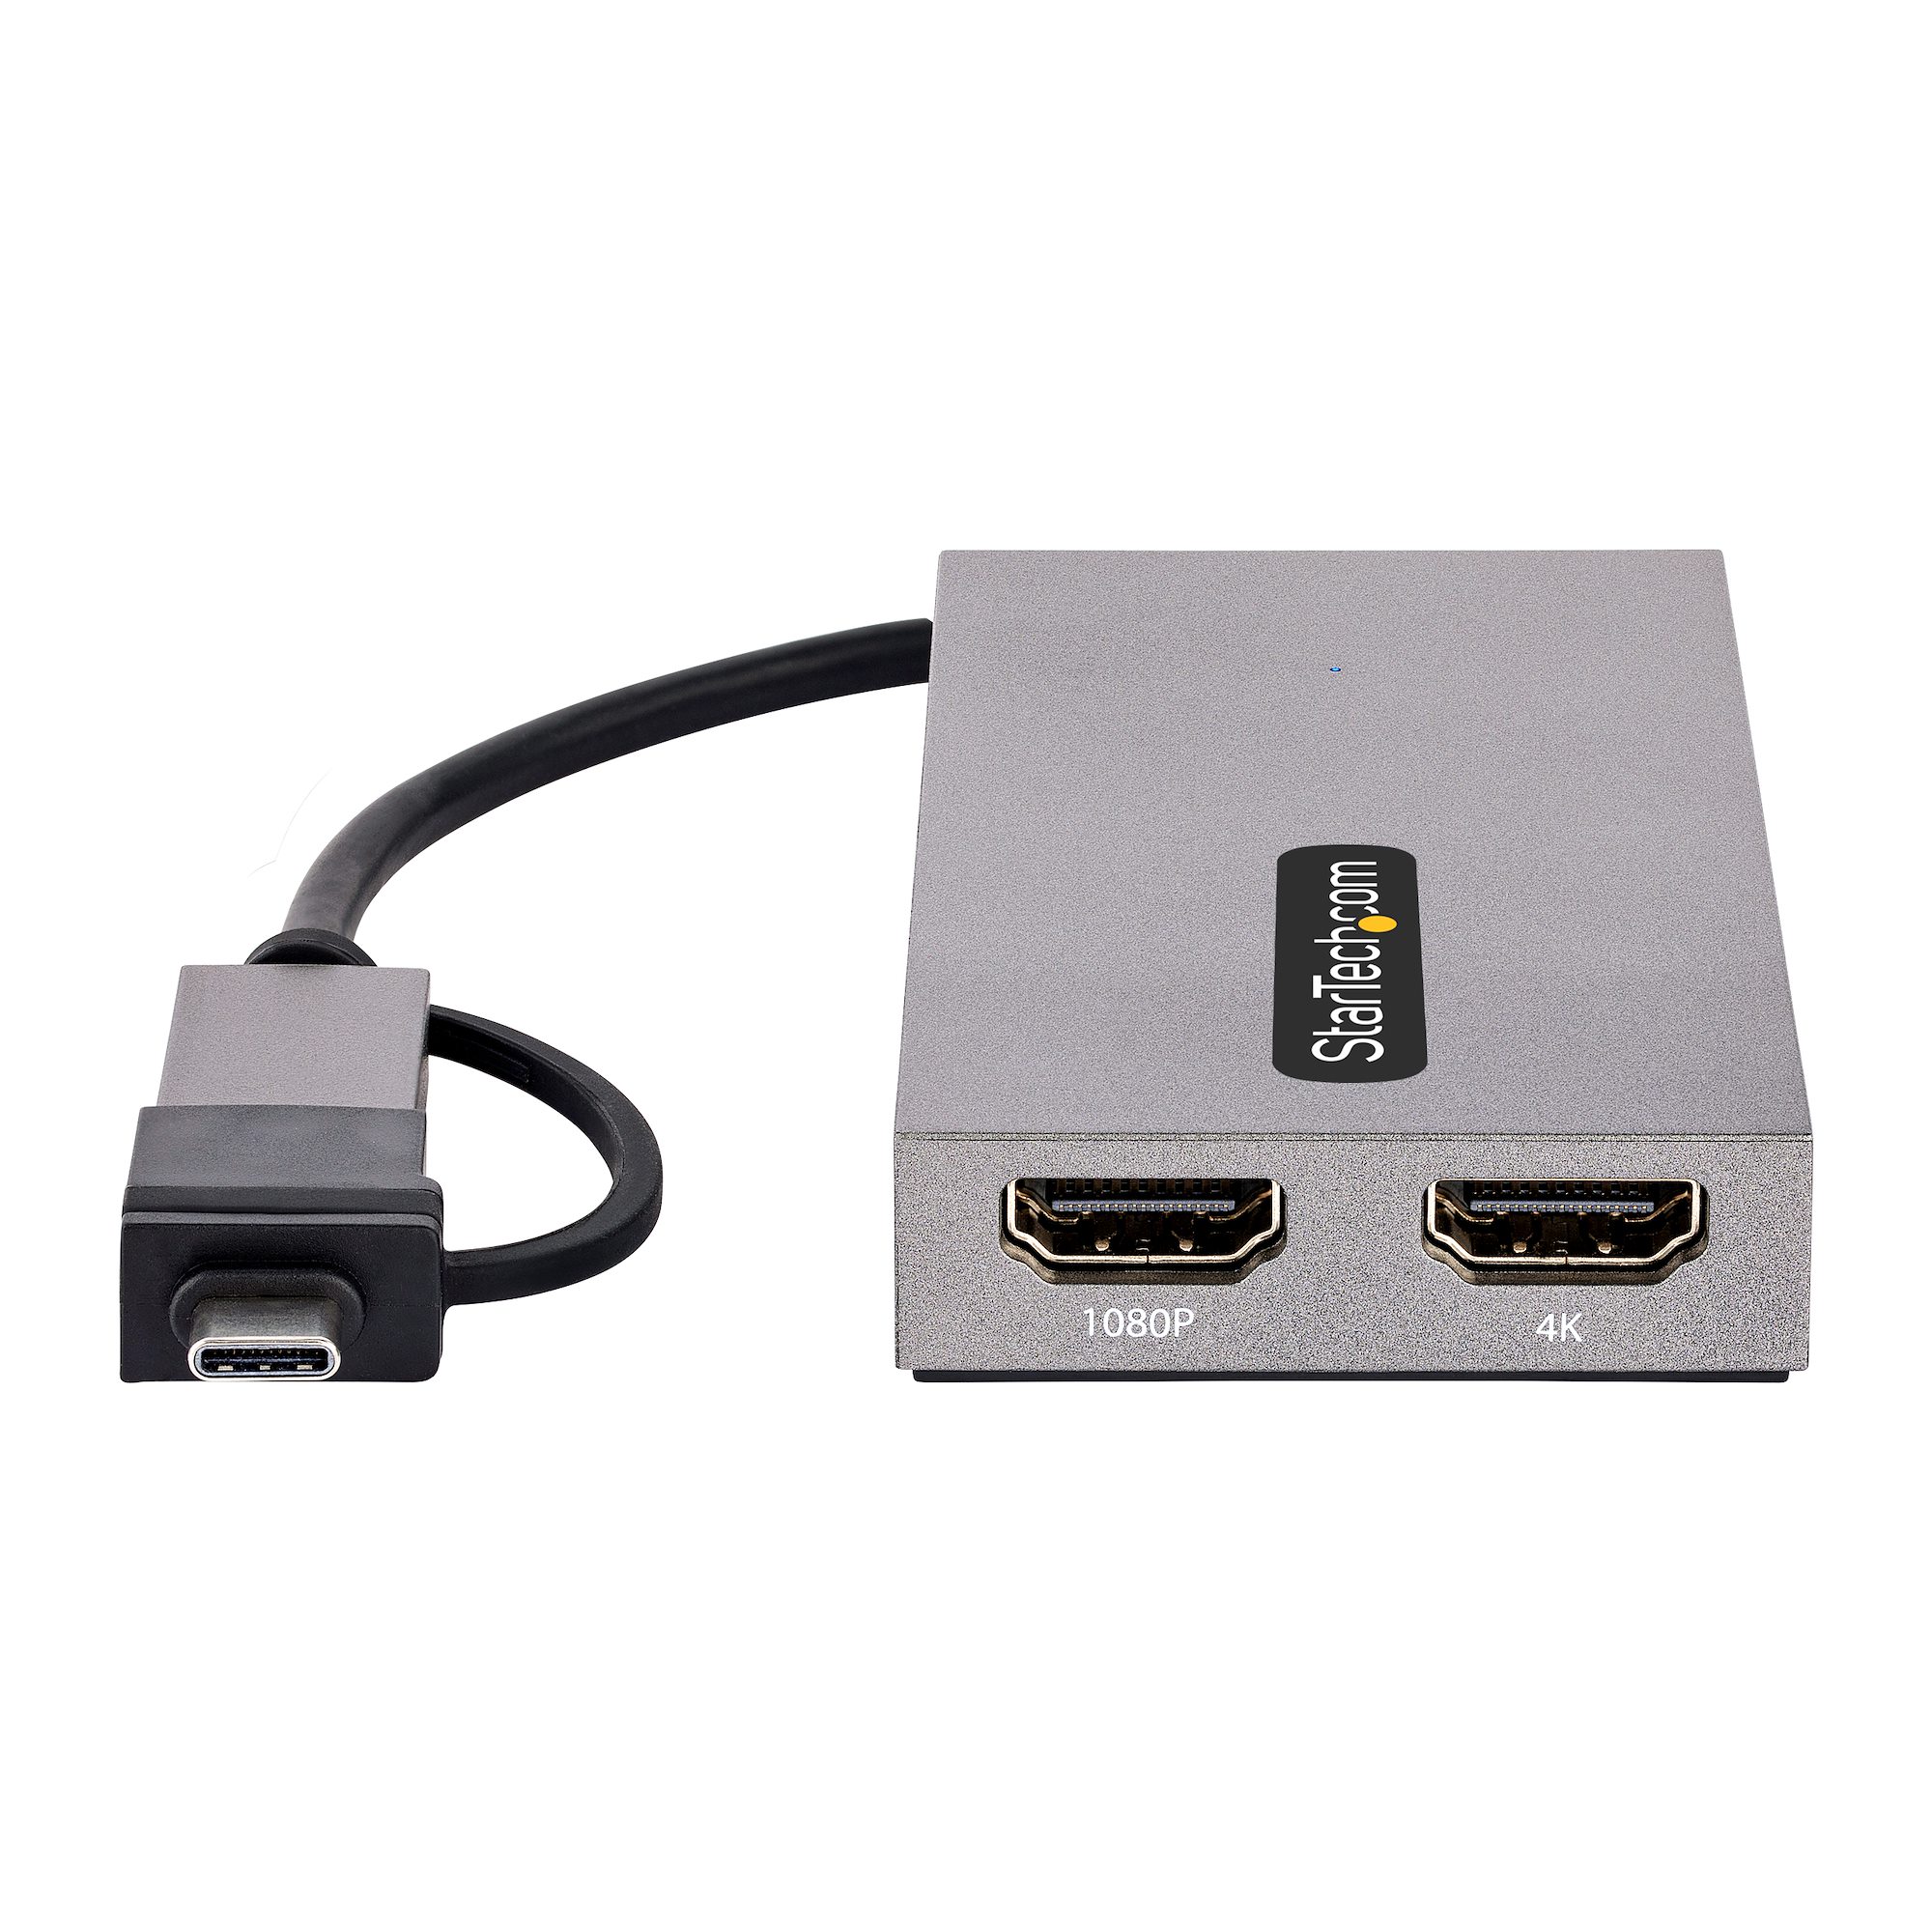 USB - デュアルHDMI変換アダプター、4K30Hz + 1080p - USBビデオアダプタ | StarTech.com 日本